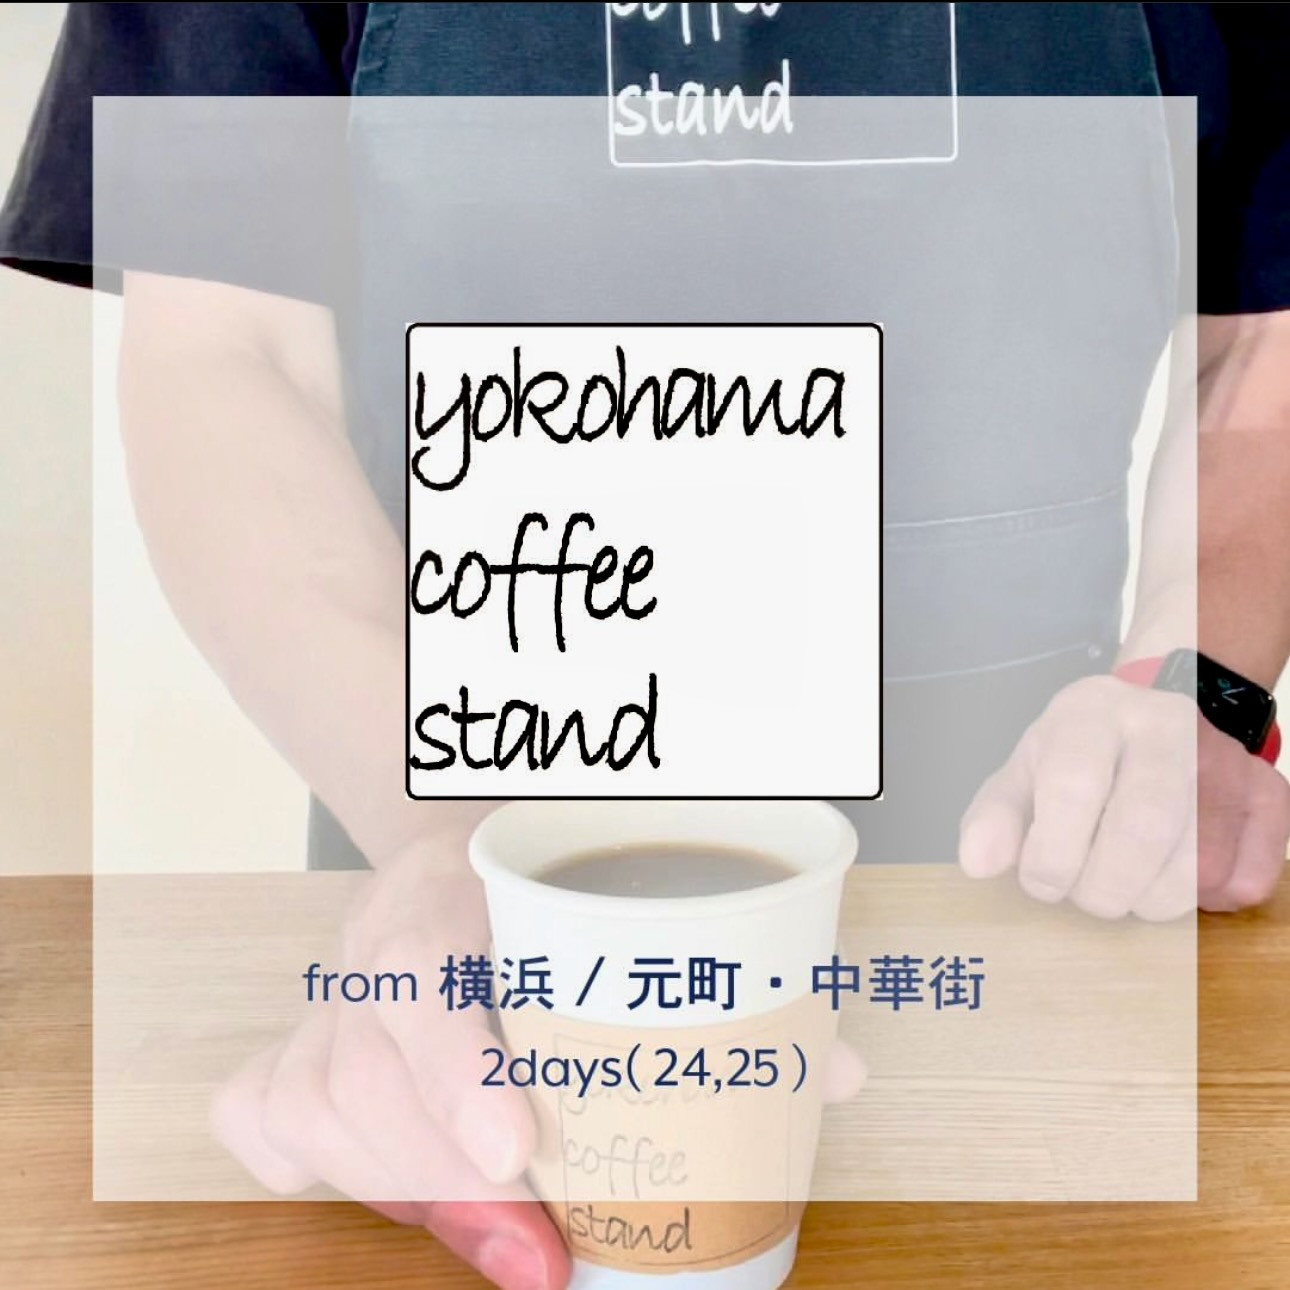 yokohama coffee festiva